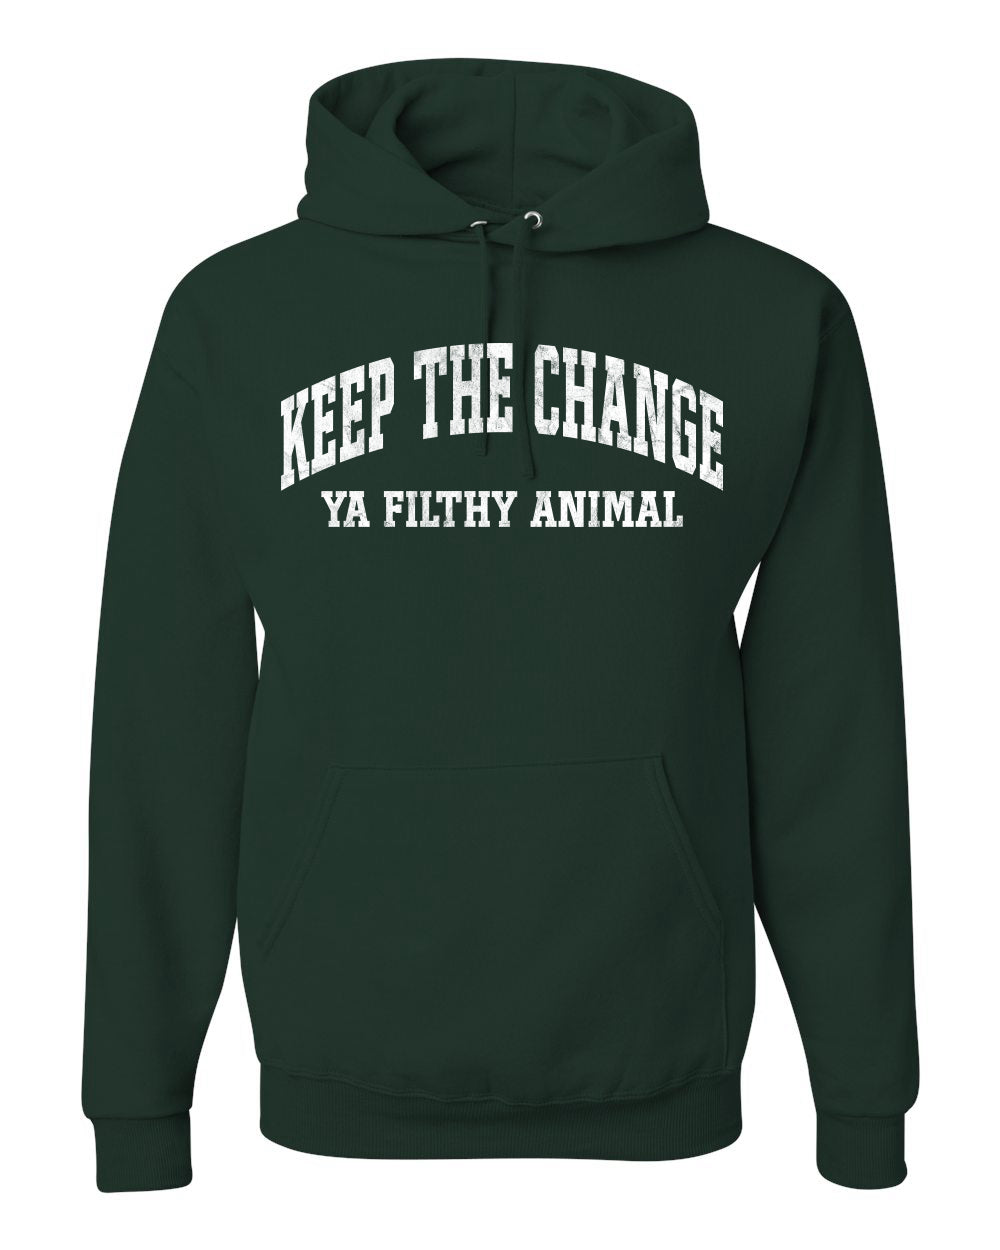 Vintage Movie Quote Keep The Change Filthy Animal Christmas Unisex Hoodie Sweatshirt